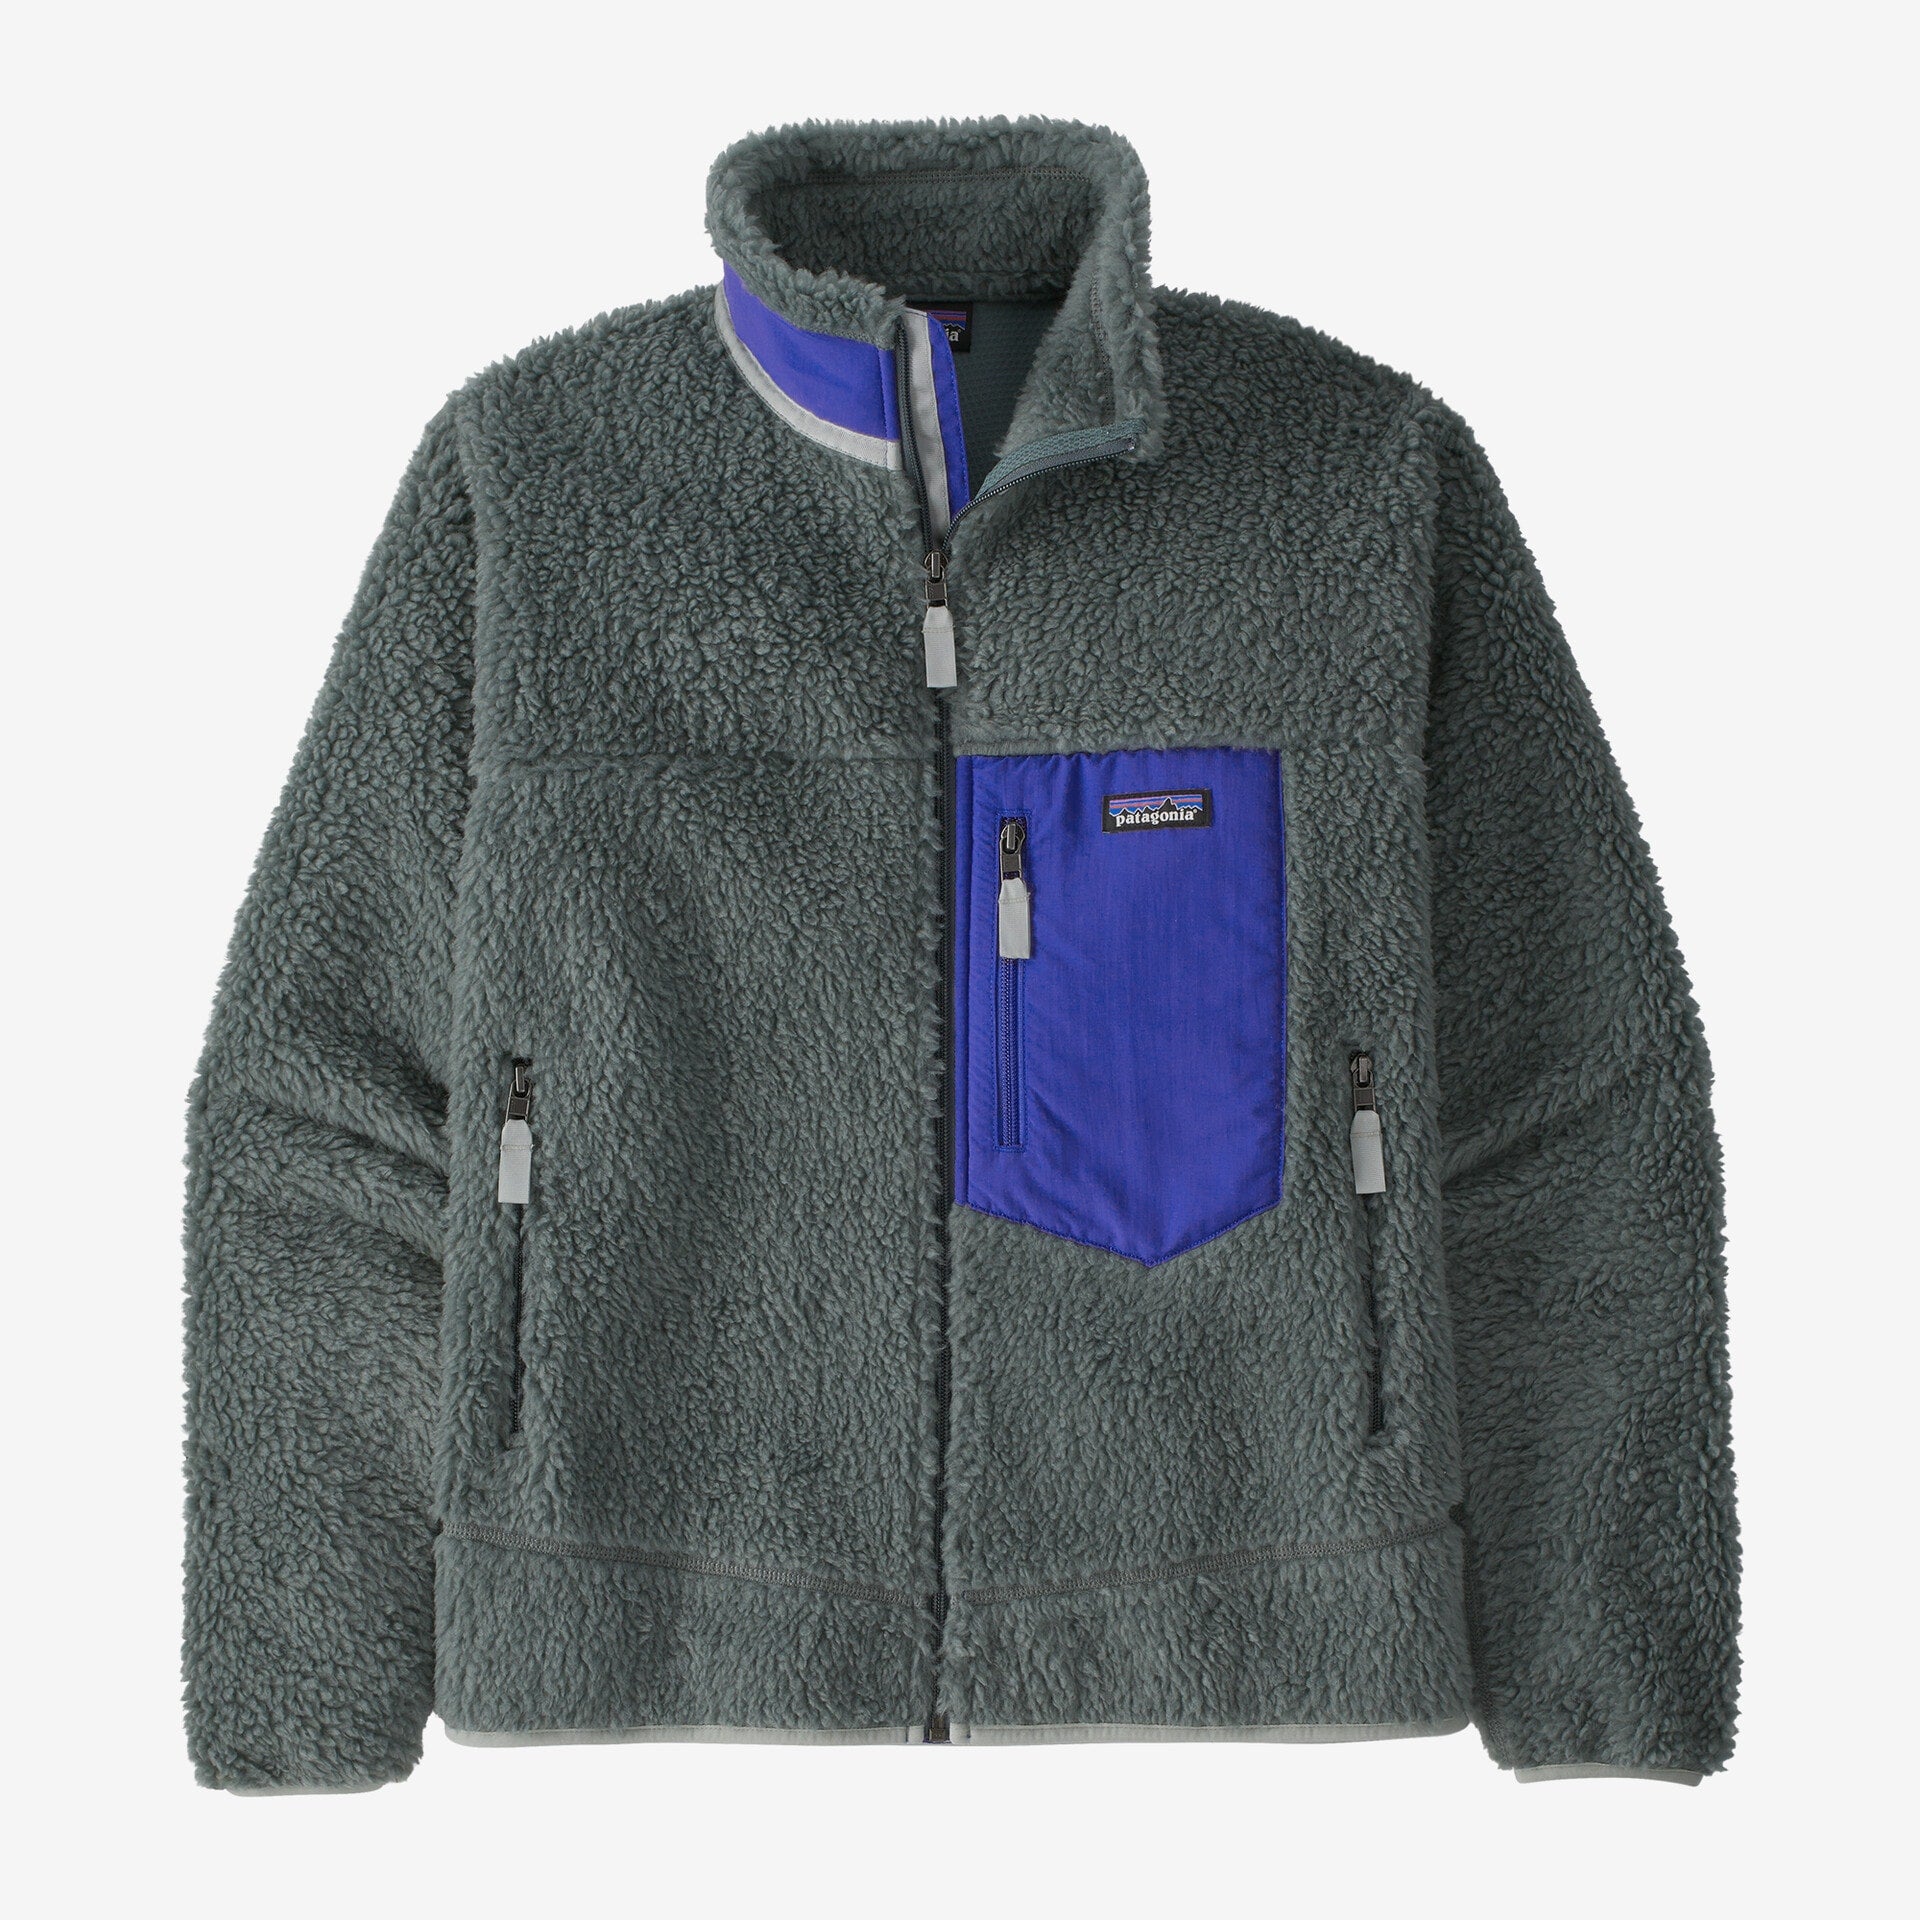 Patagonia Men's Classic Retro-X Fleece Jacket (Past Season)